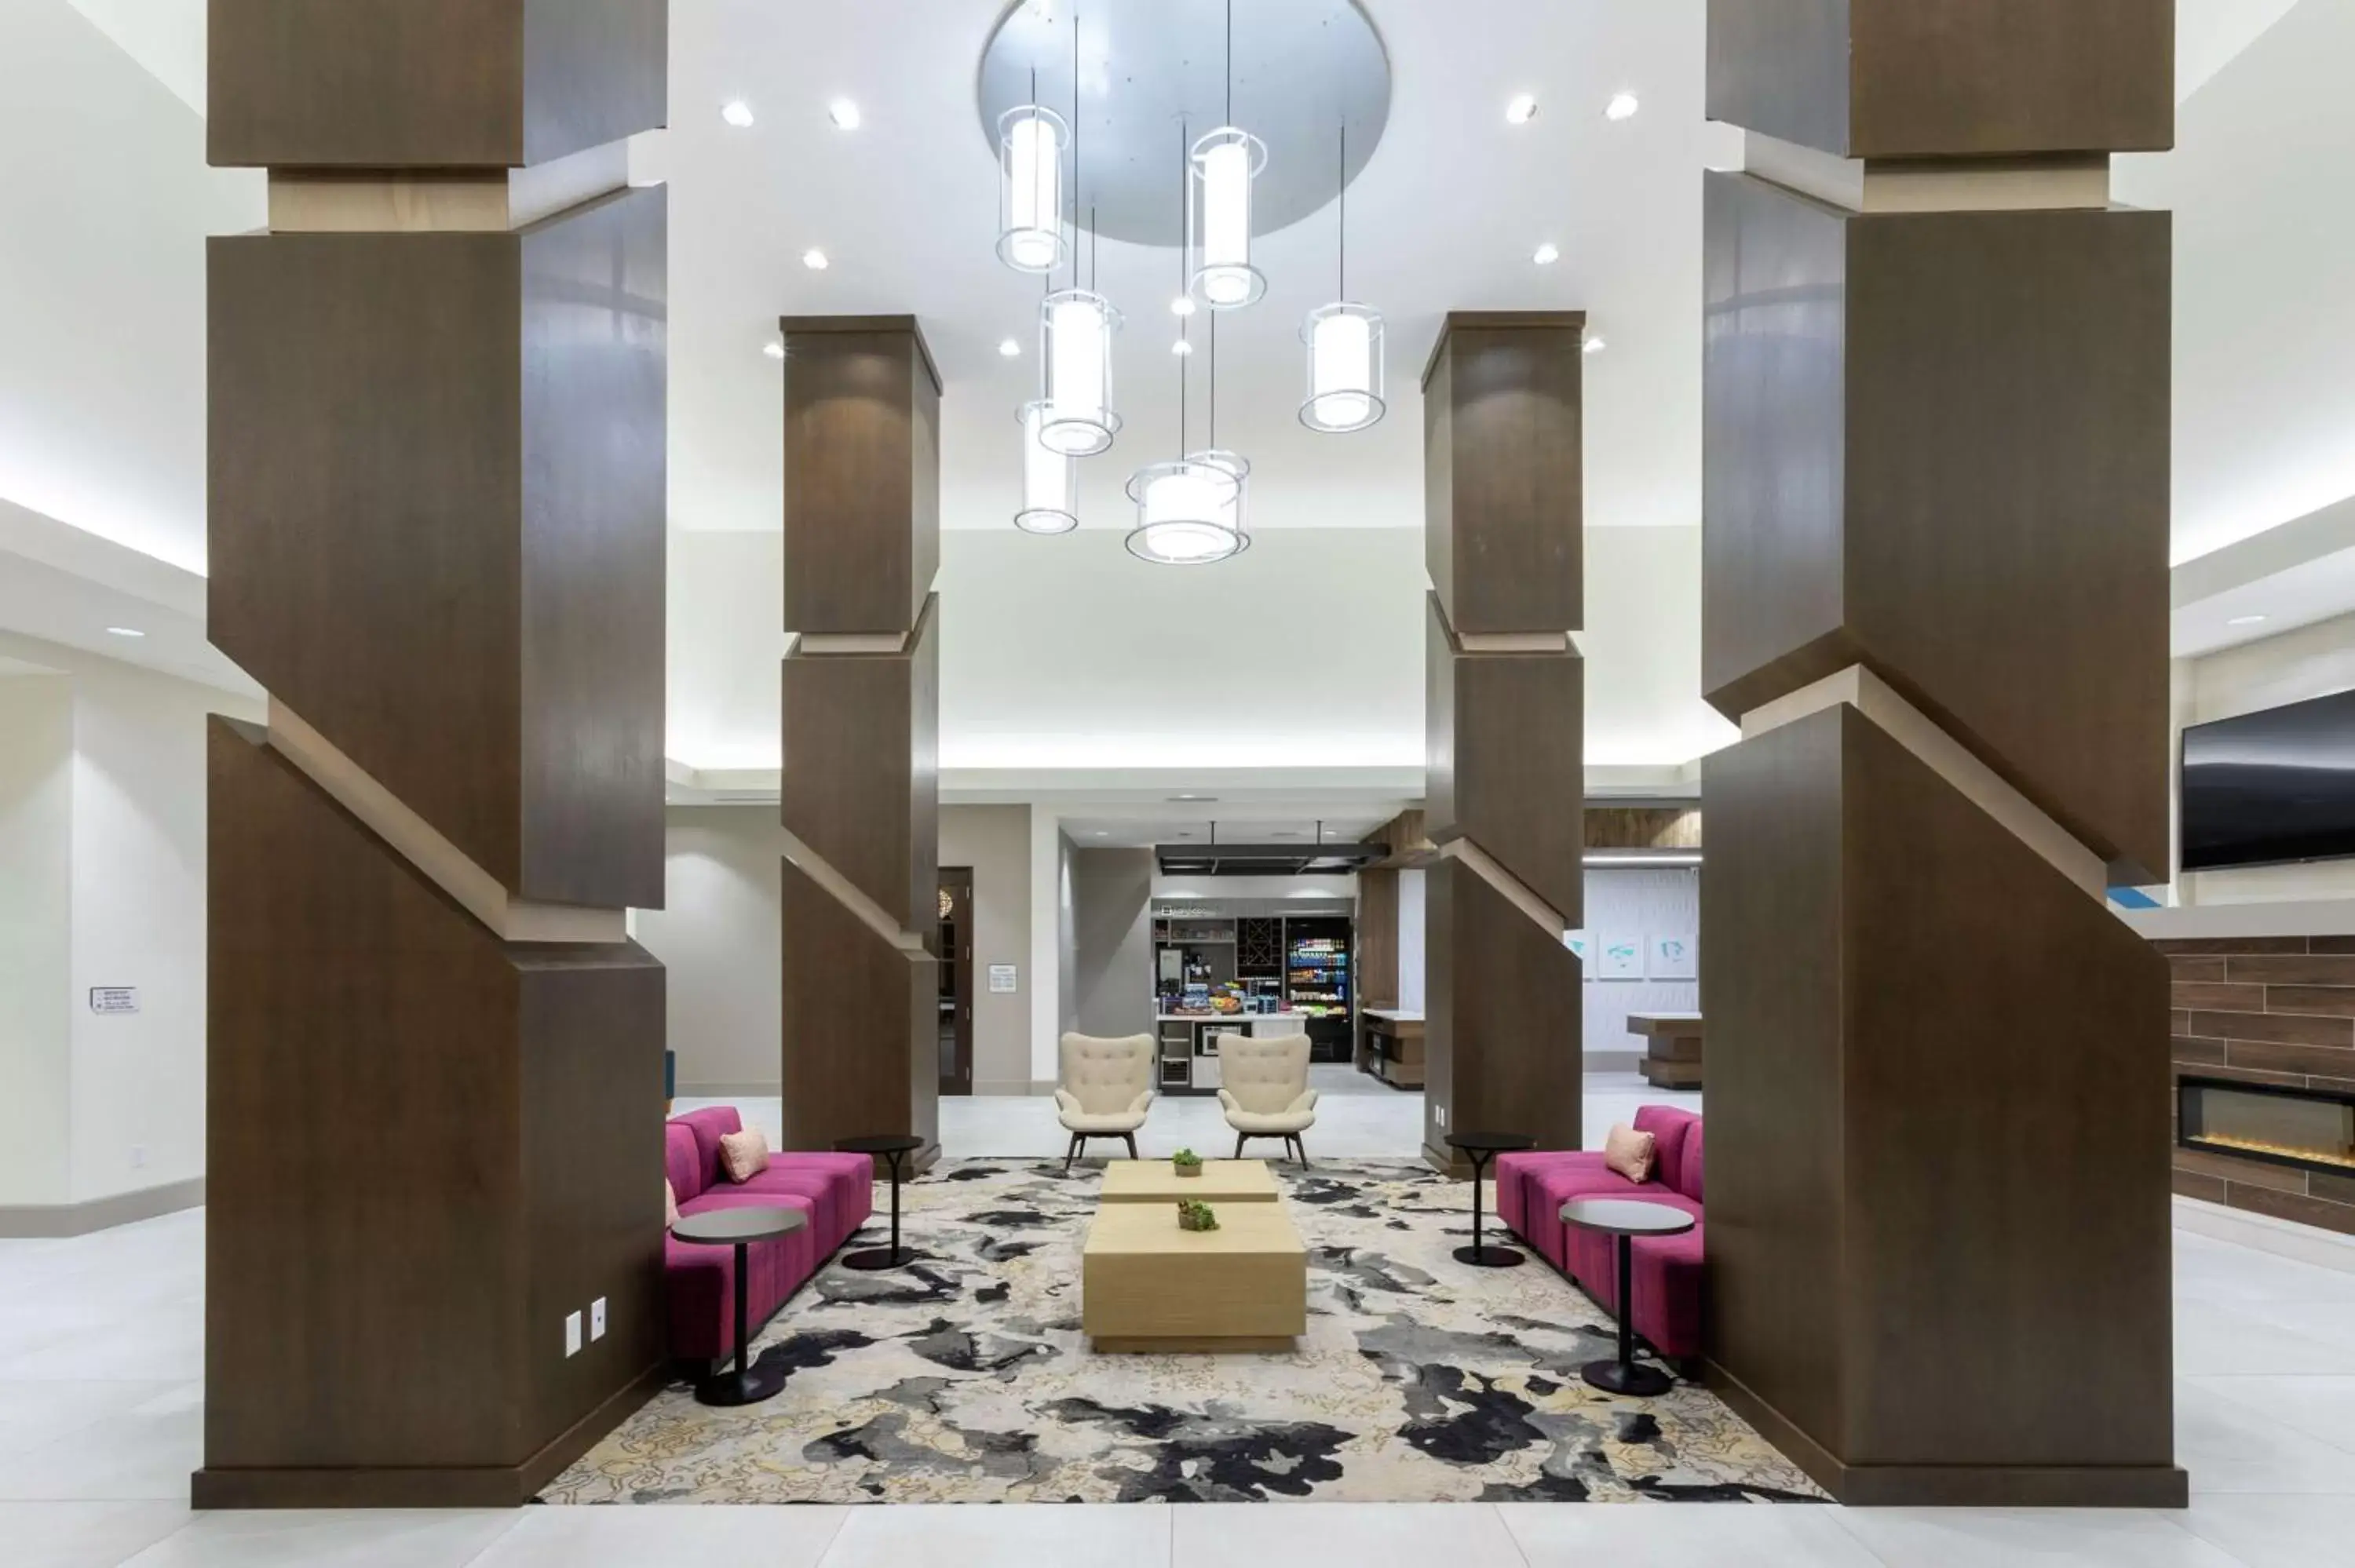 Lobby or reception, Banquet Facilities in Hilton Garden Inn St. Cloud, Mn